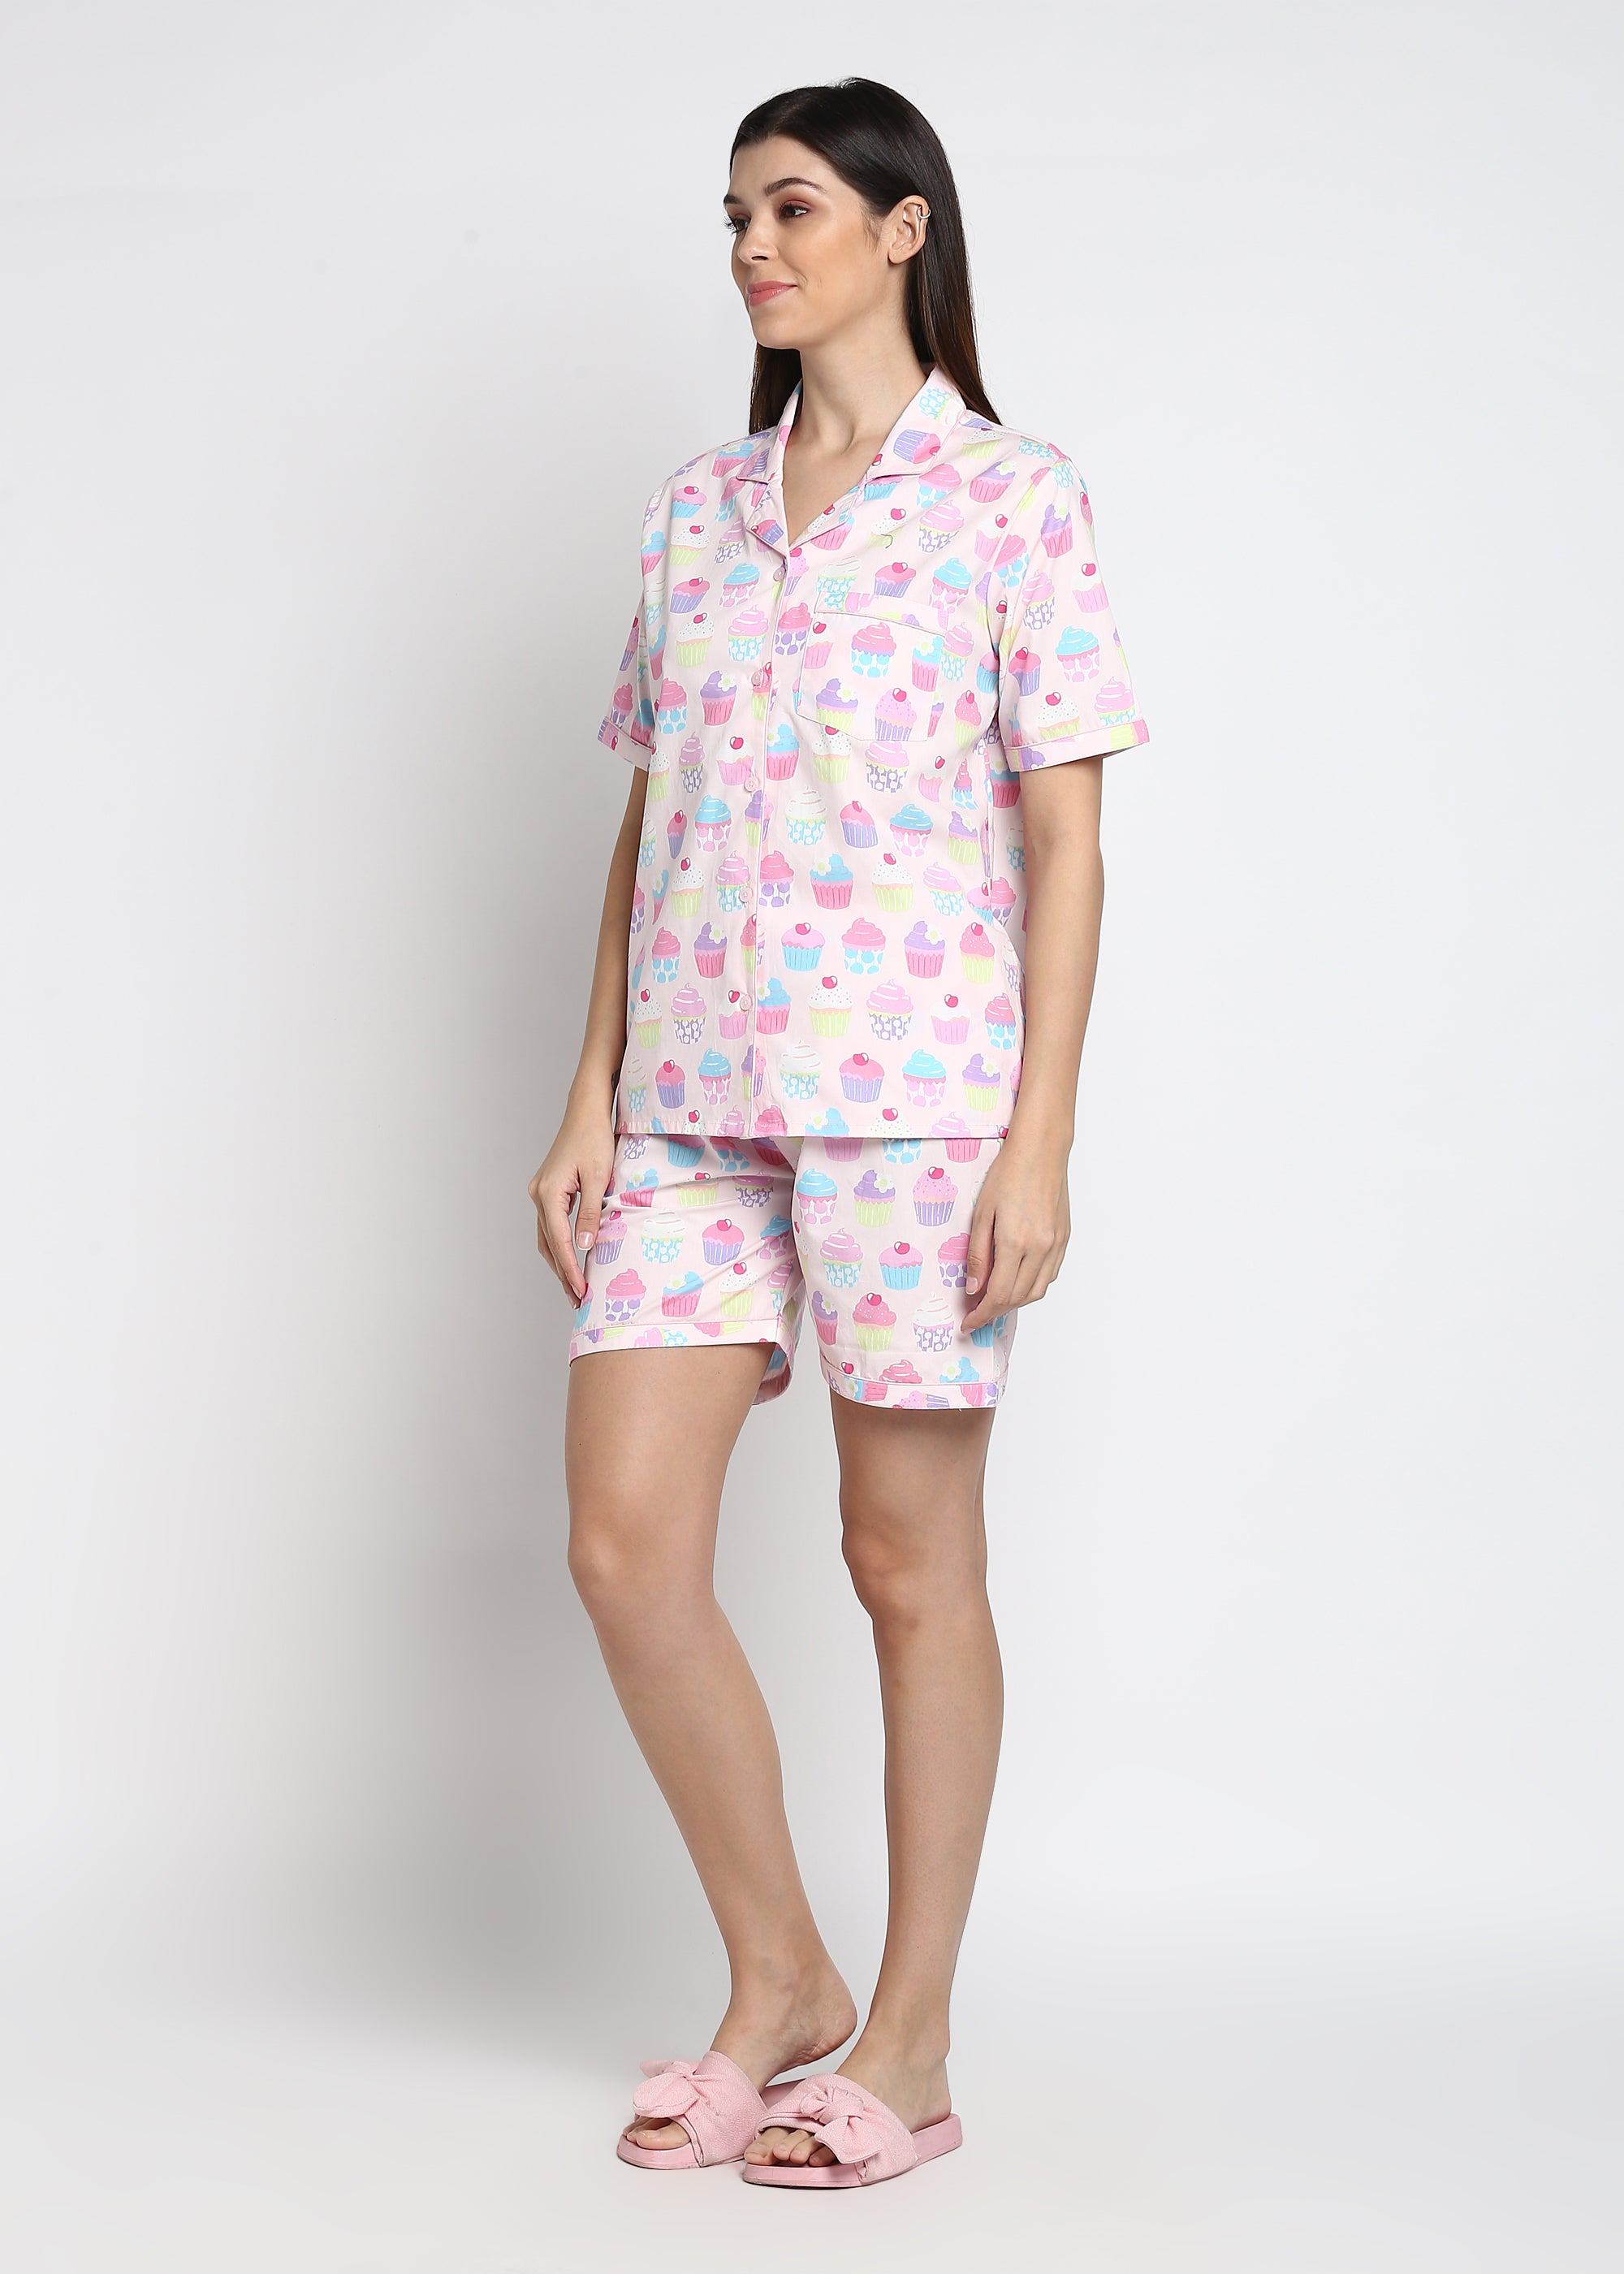 Cupcake Print Shirt & Shorts Women's Set - Shopbloom